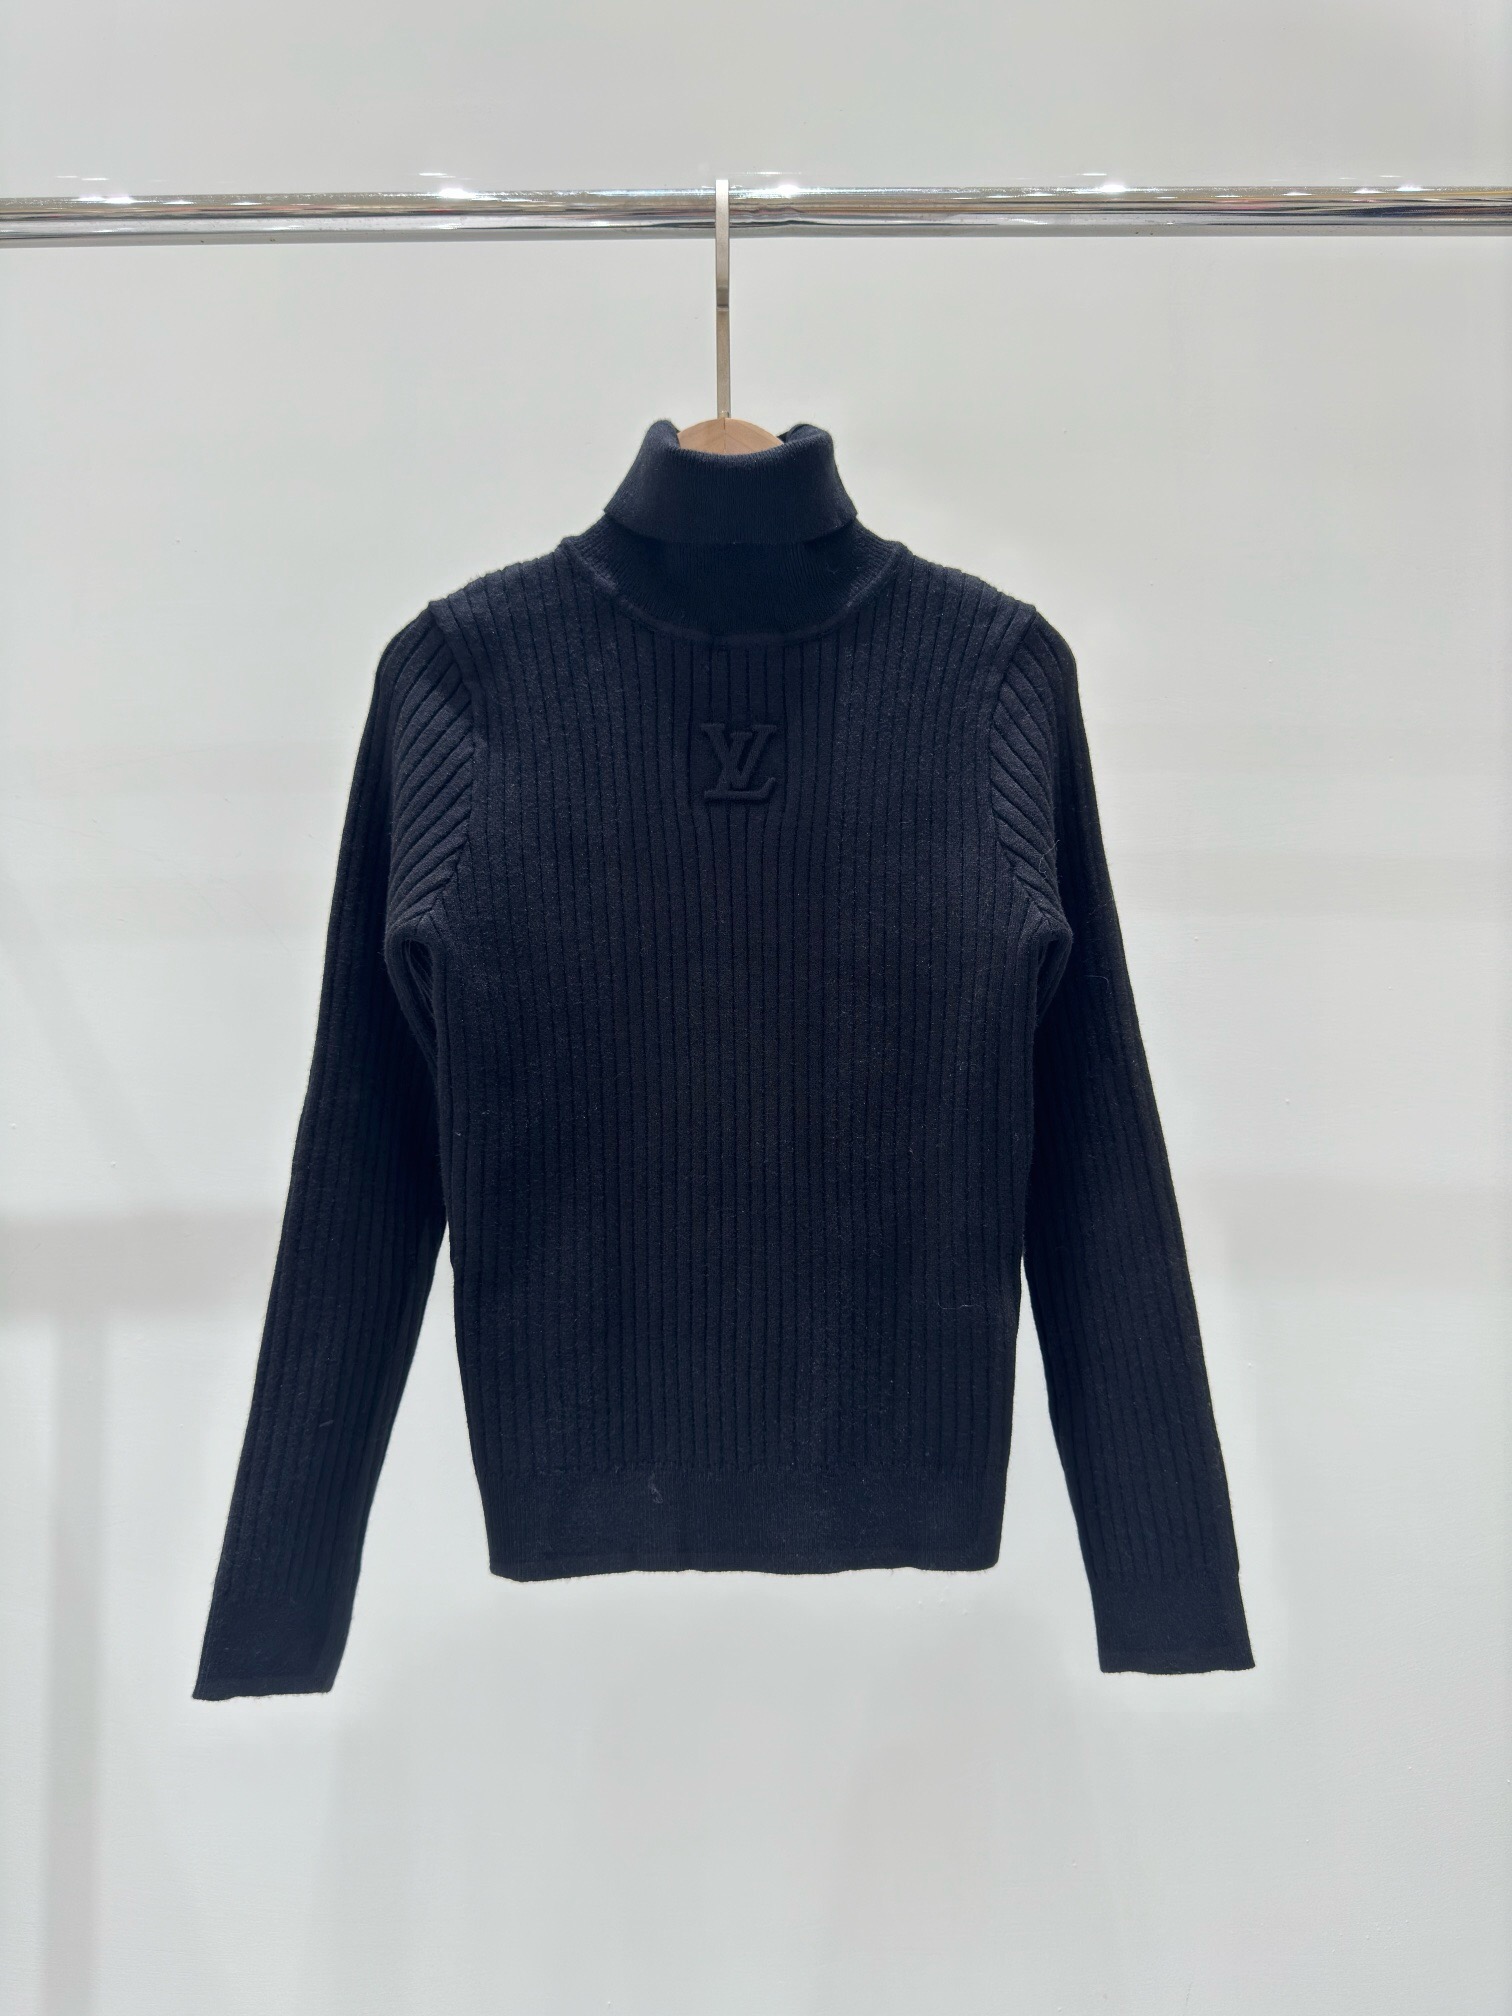 Luxury
 Louis Vuitton Clothing Knit Sweater Sweatshirts Black Brick Red White Knitting Wool Fall/Winter Collection